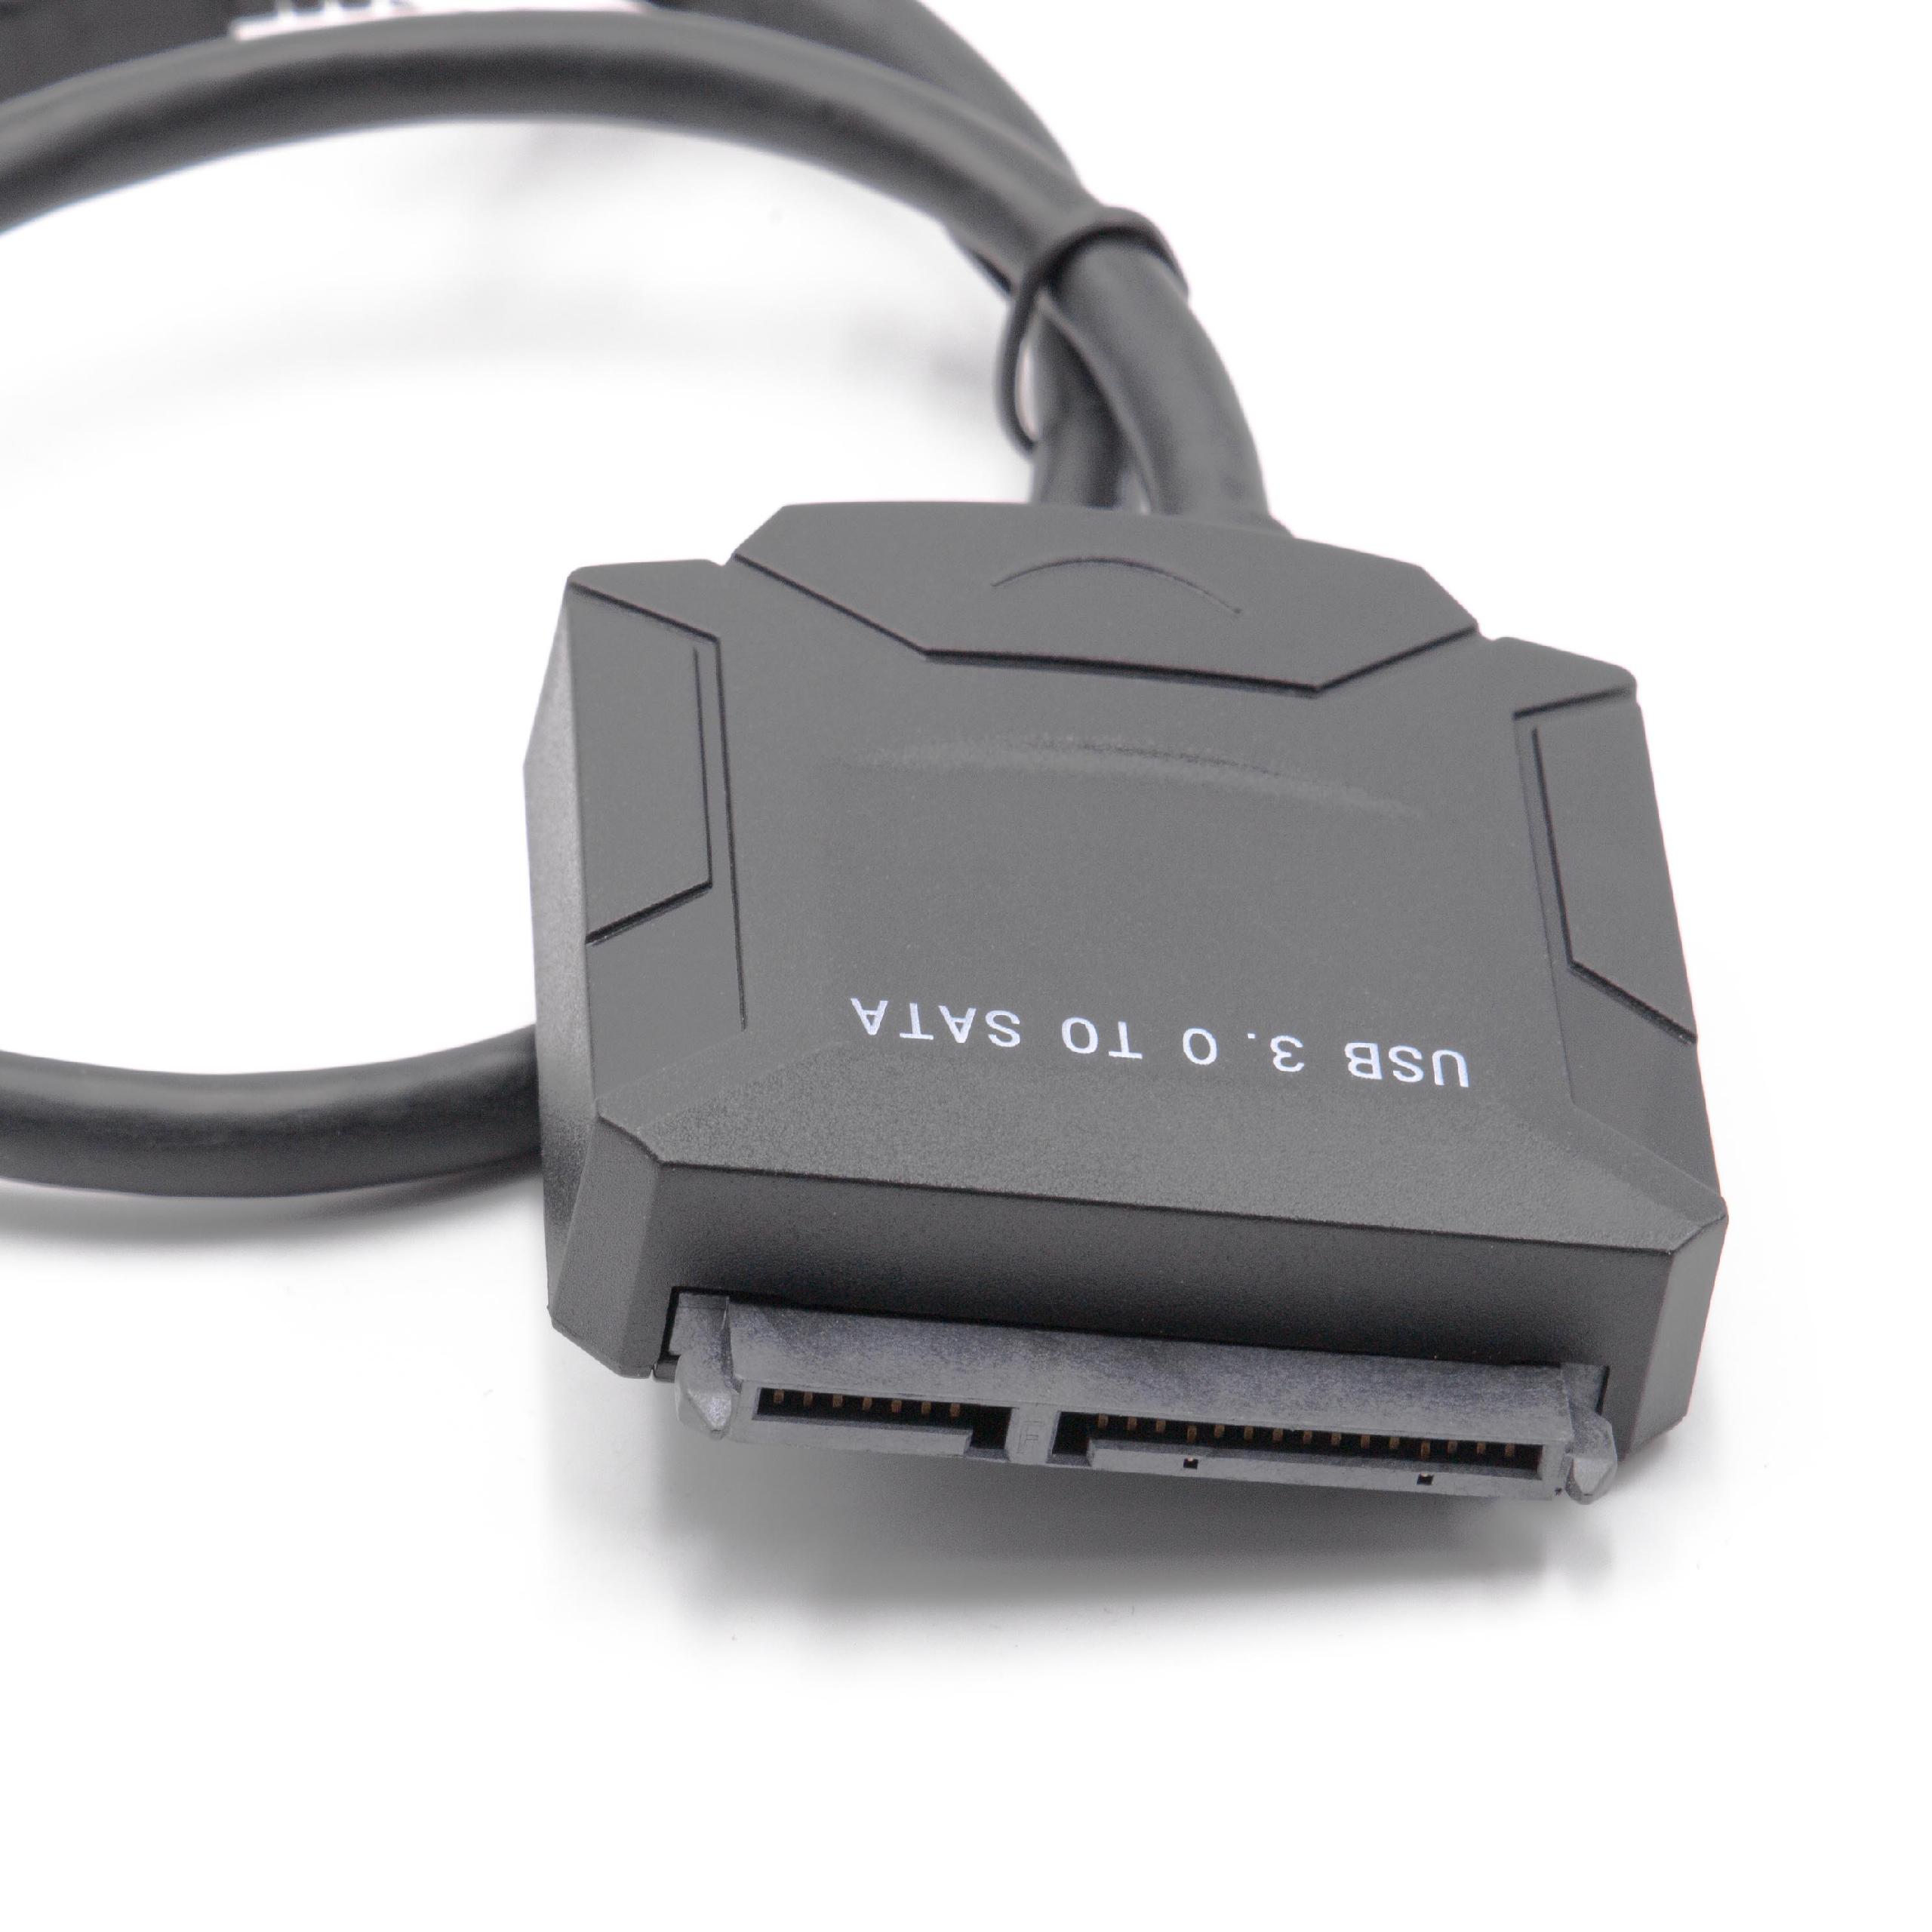 Vhbw SATA III vers USB 3.0 Câble de raccordement pour disque dur 2'5, 3'5  HDD, SSD Plug & Play bleu / noir